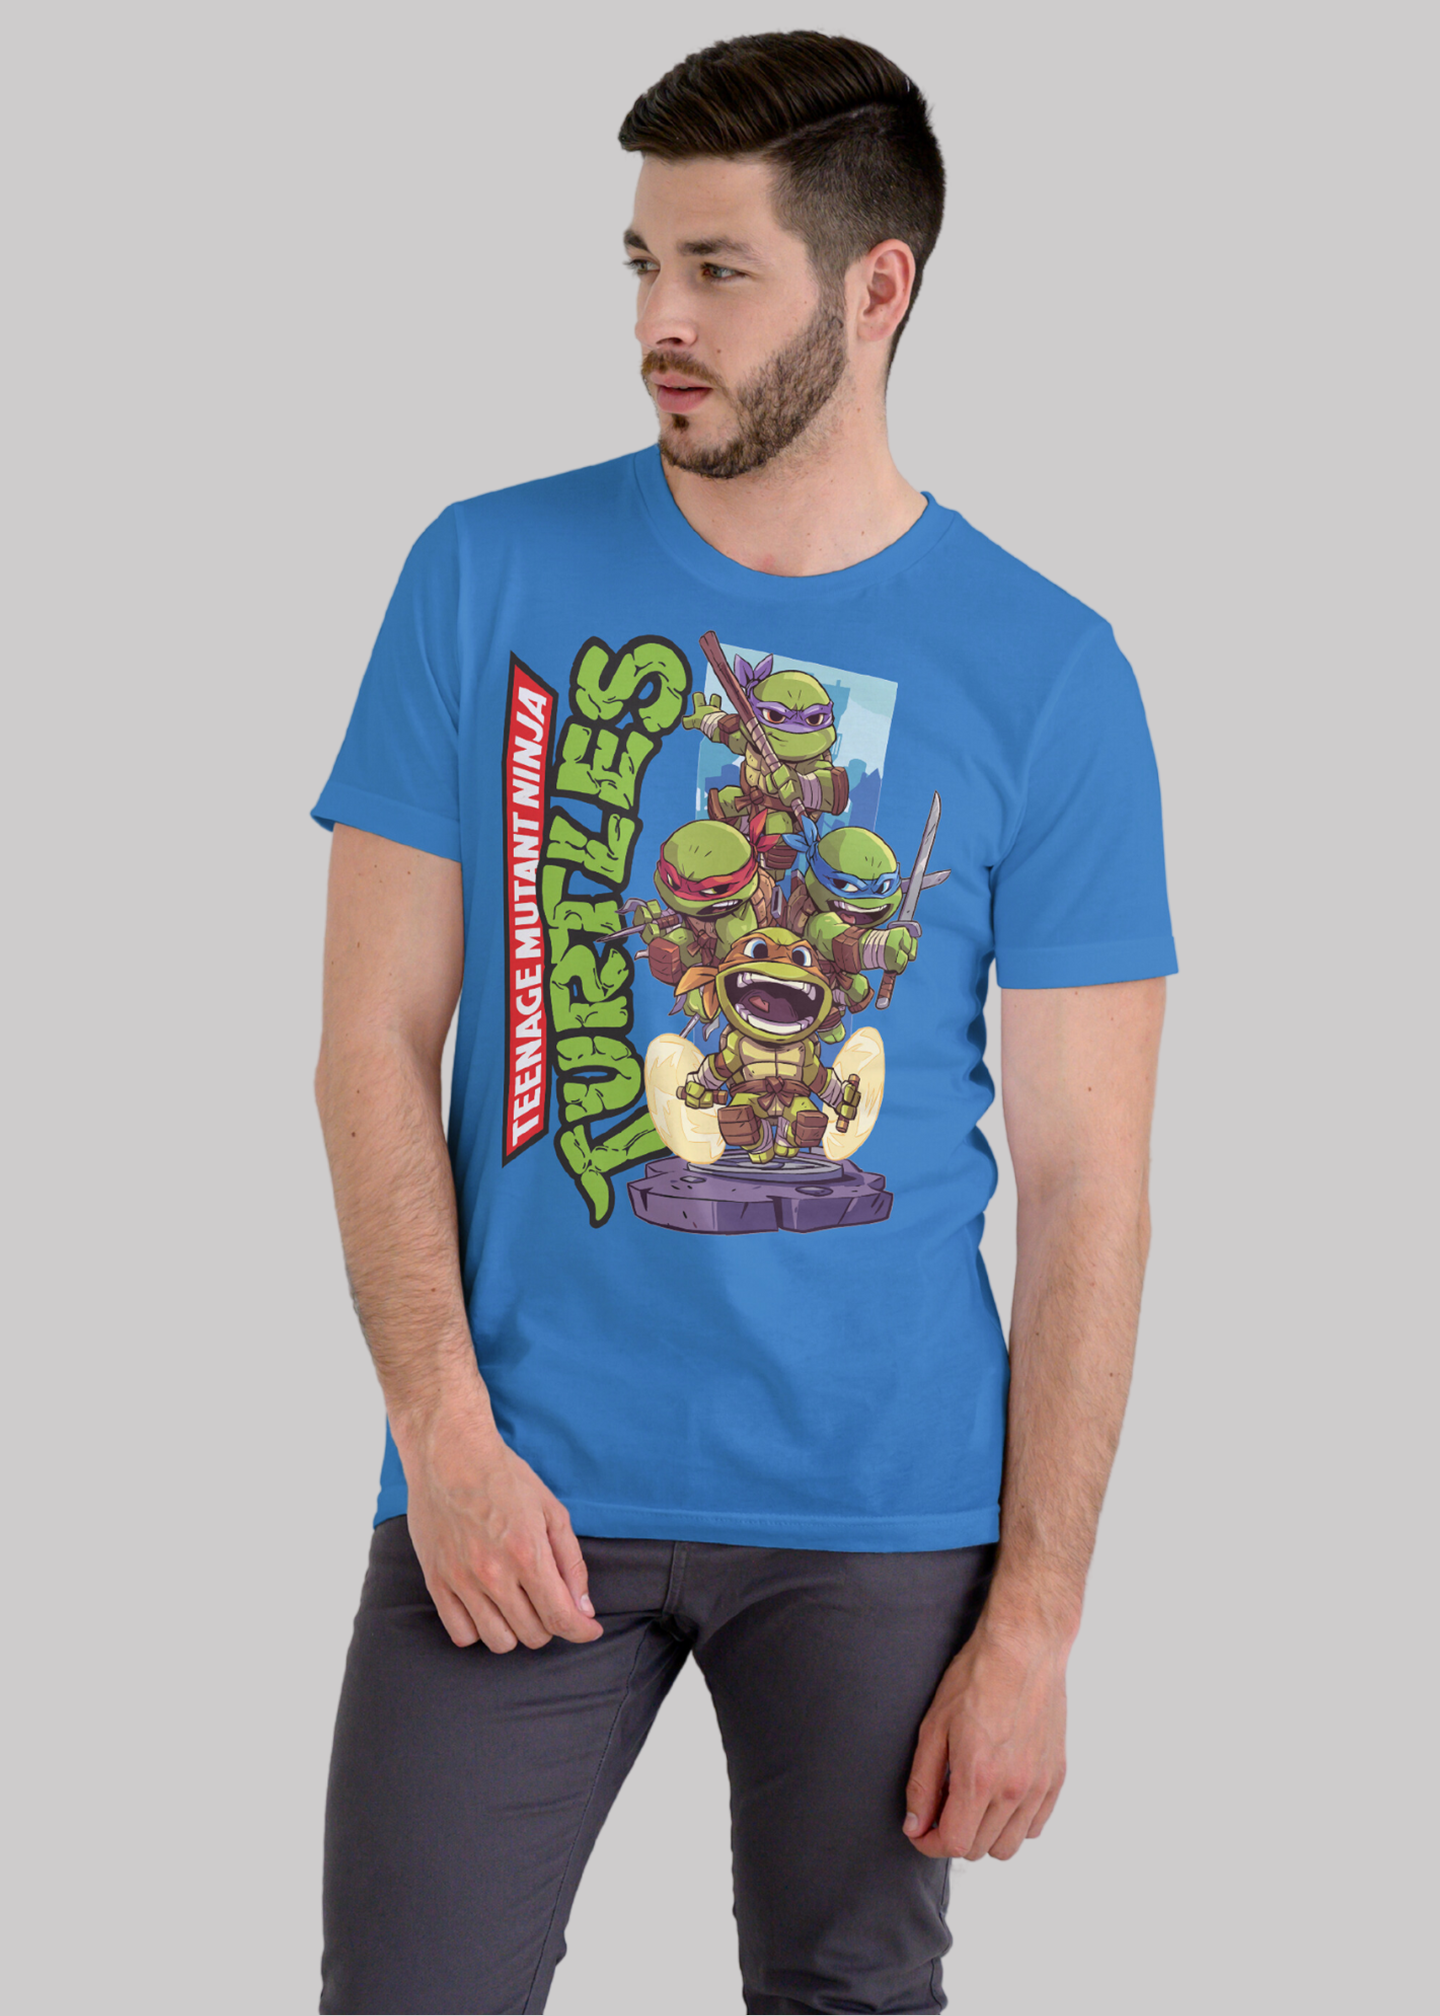 Ninja Turtle Printed Half Sleeve Premium Cotton T-shirt For Men